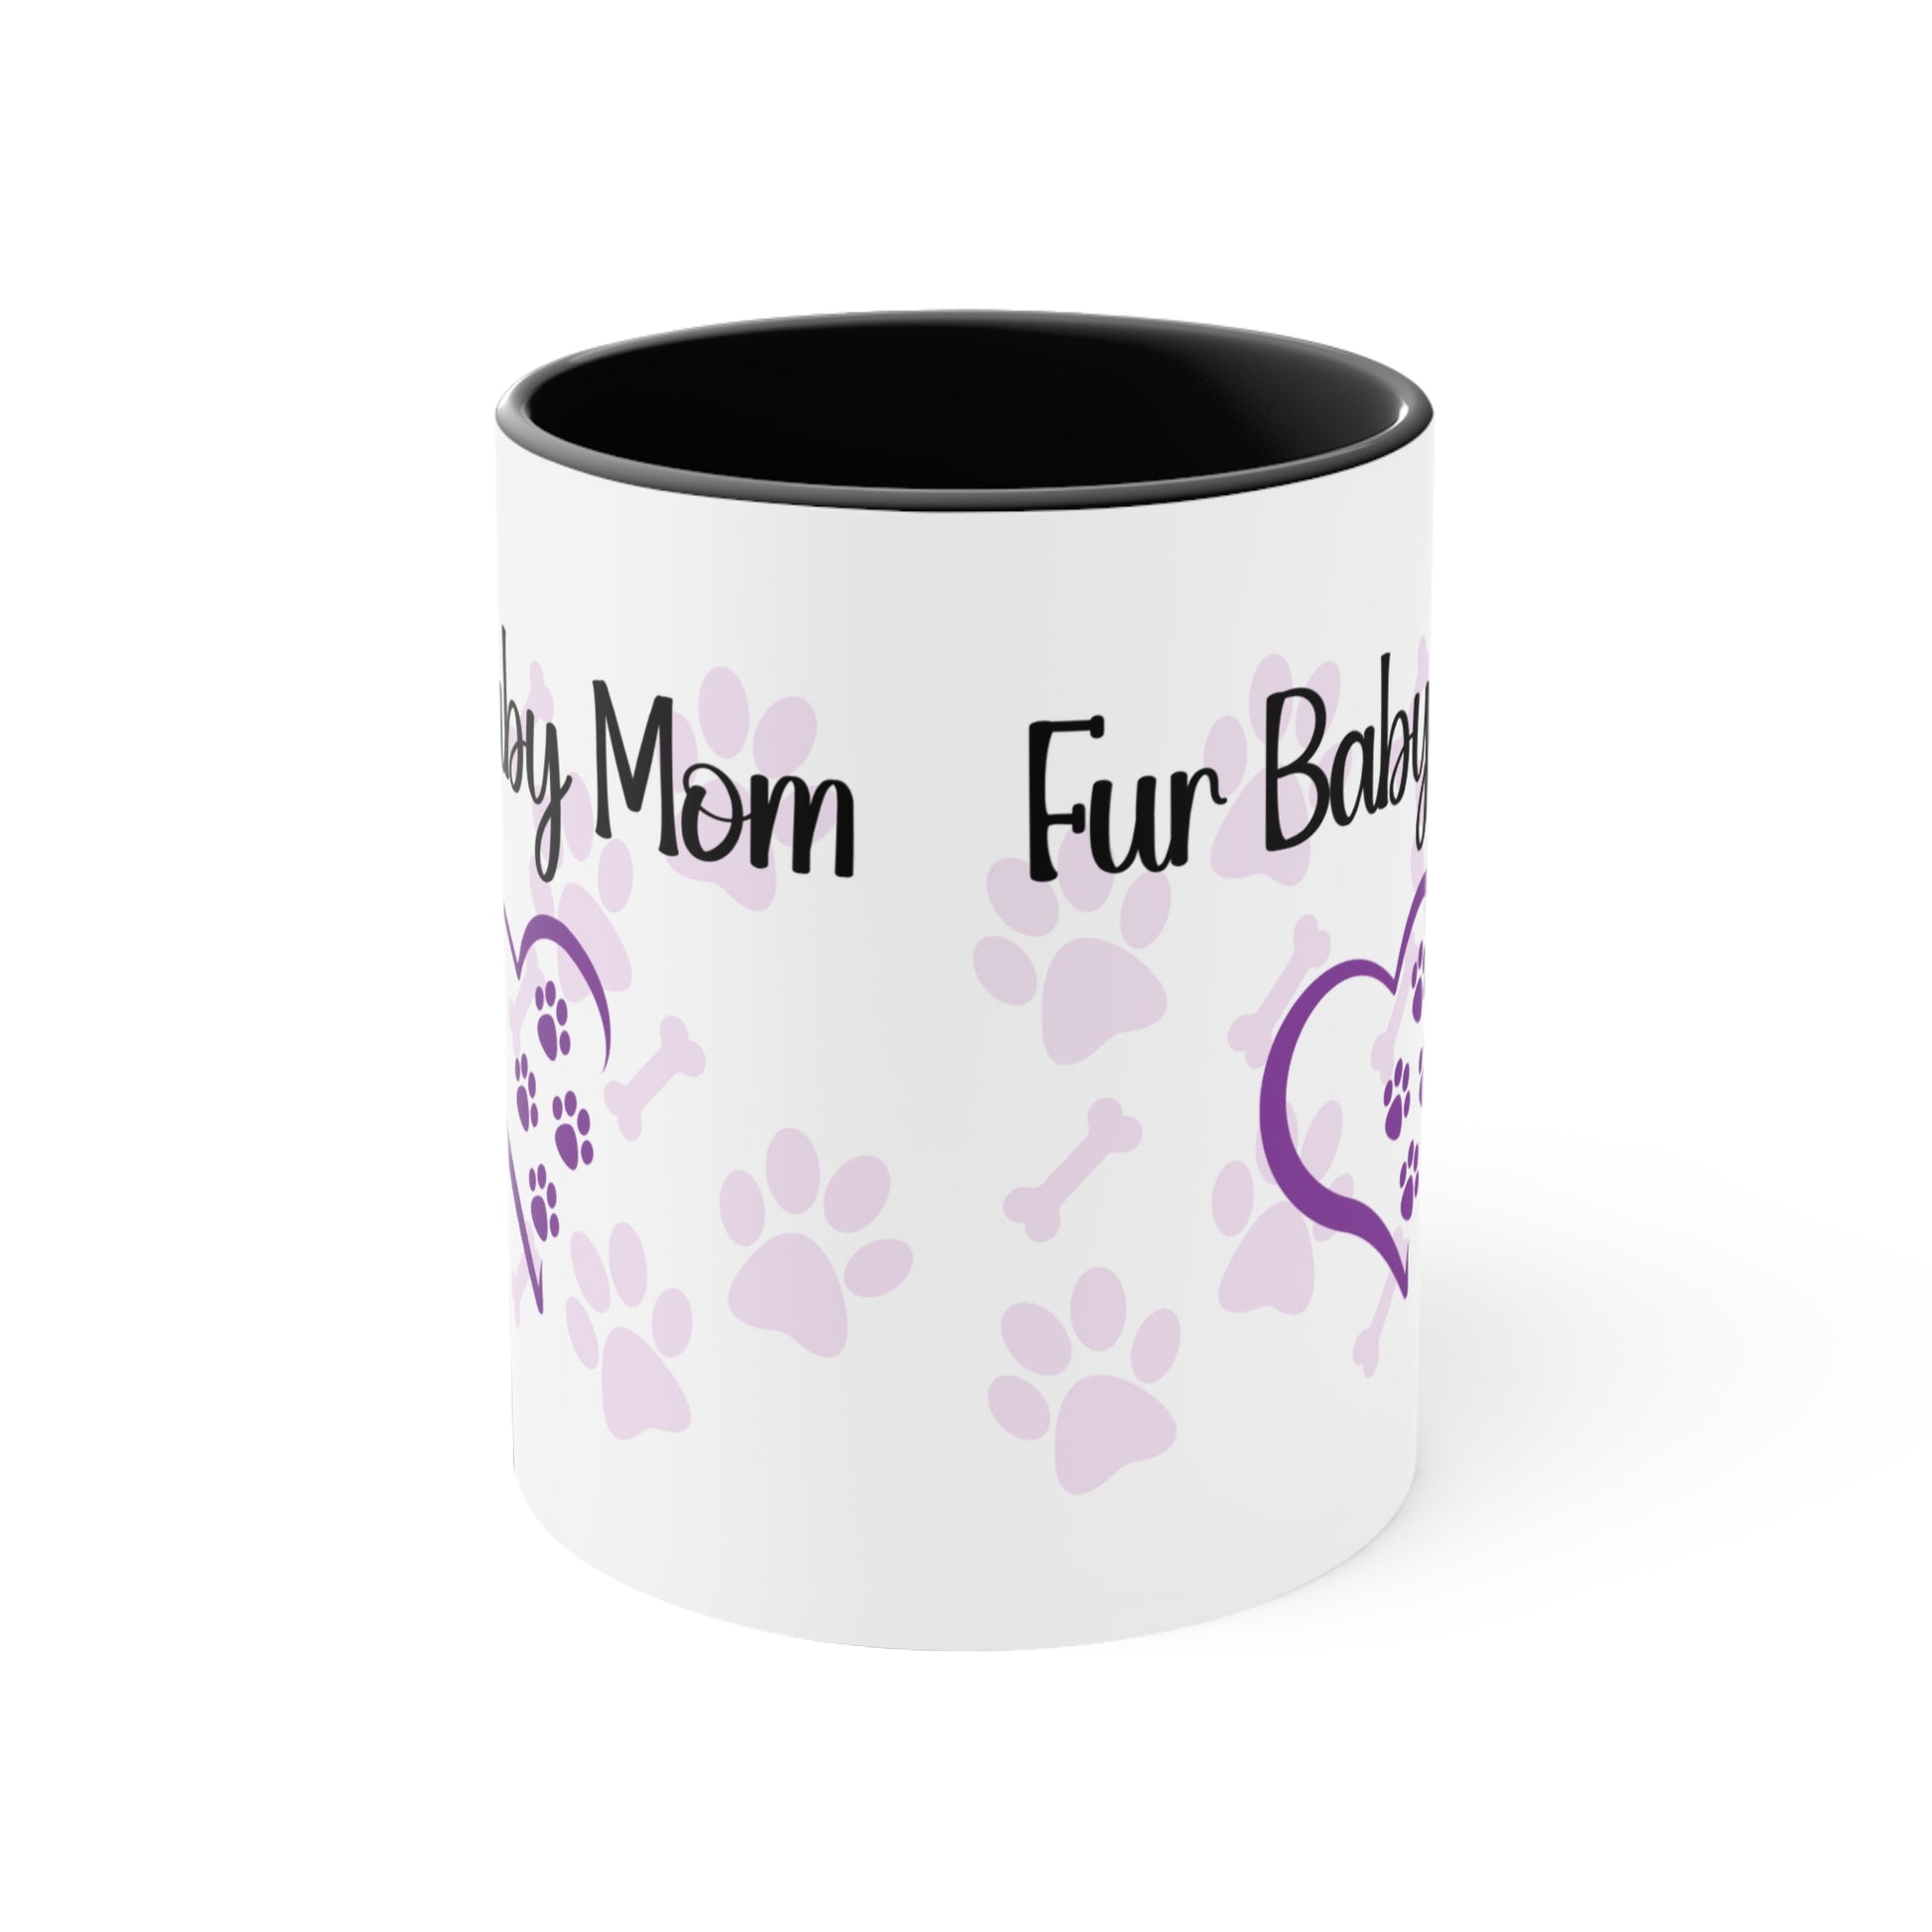 Fur baby mom coffee mug with paw prints 11 oz, side view.